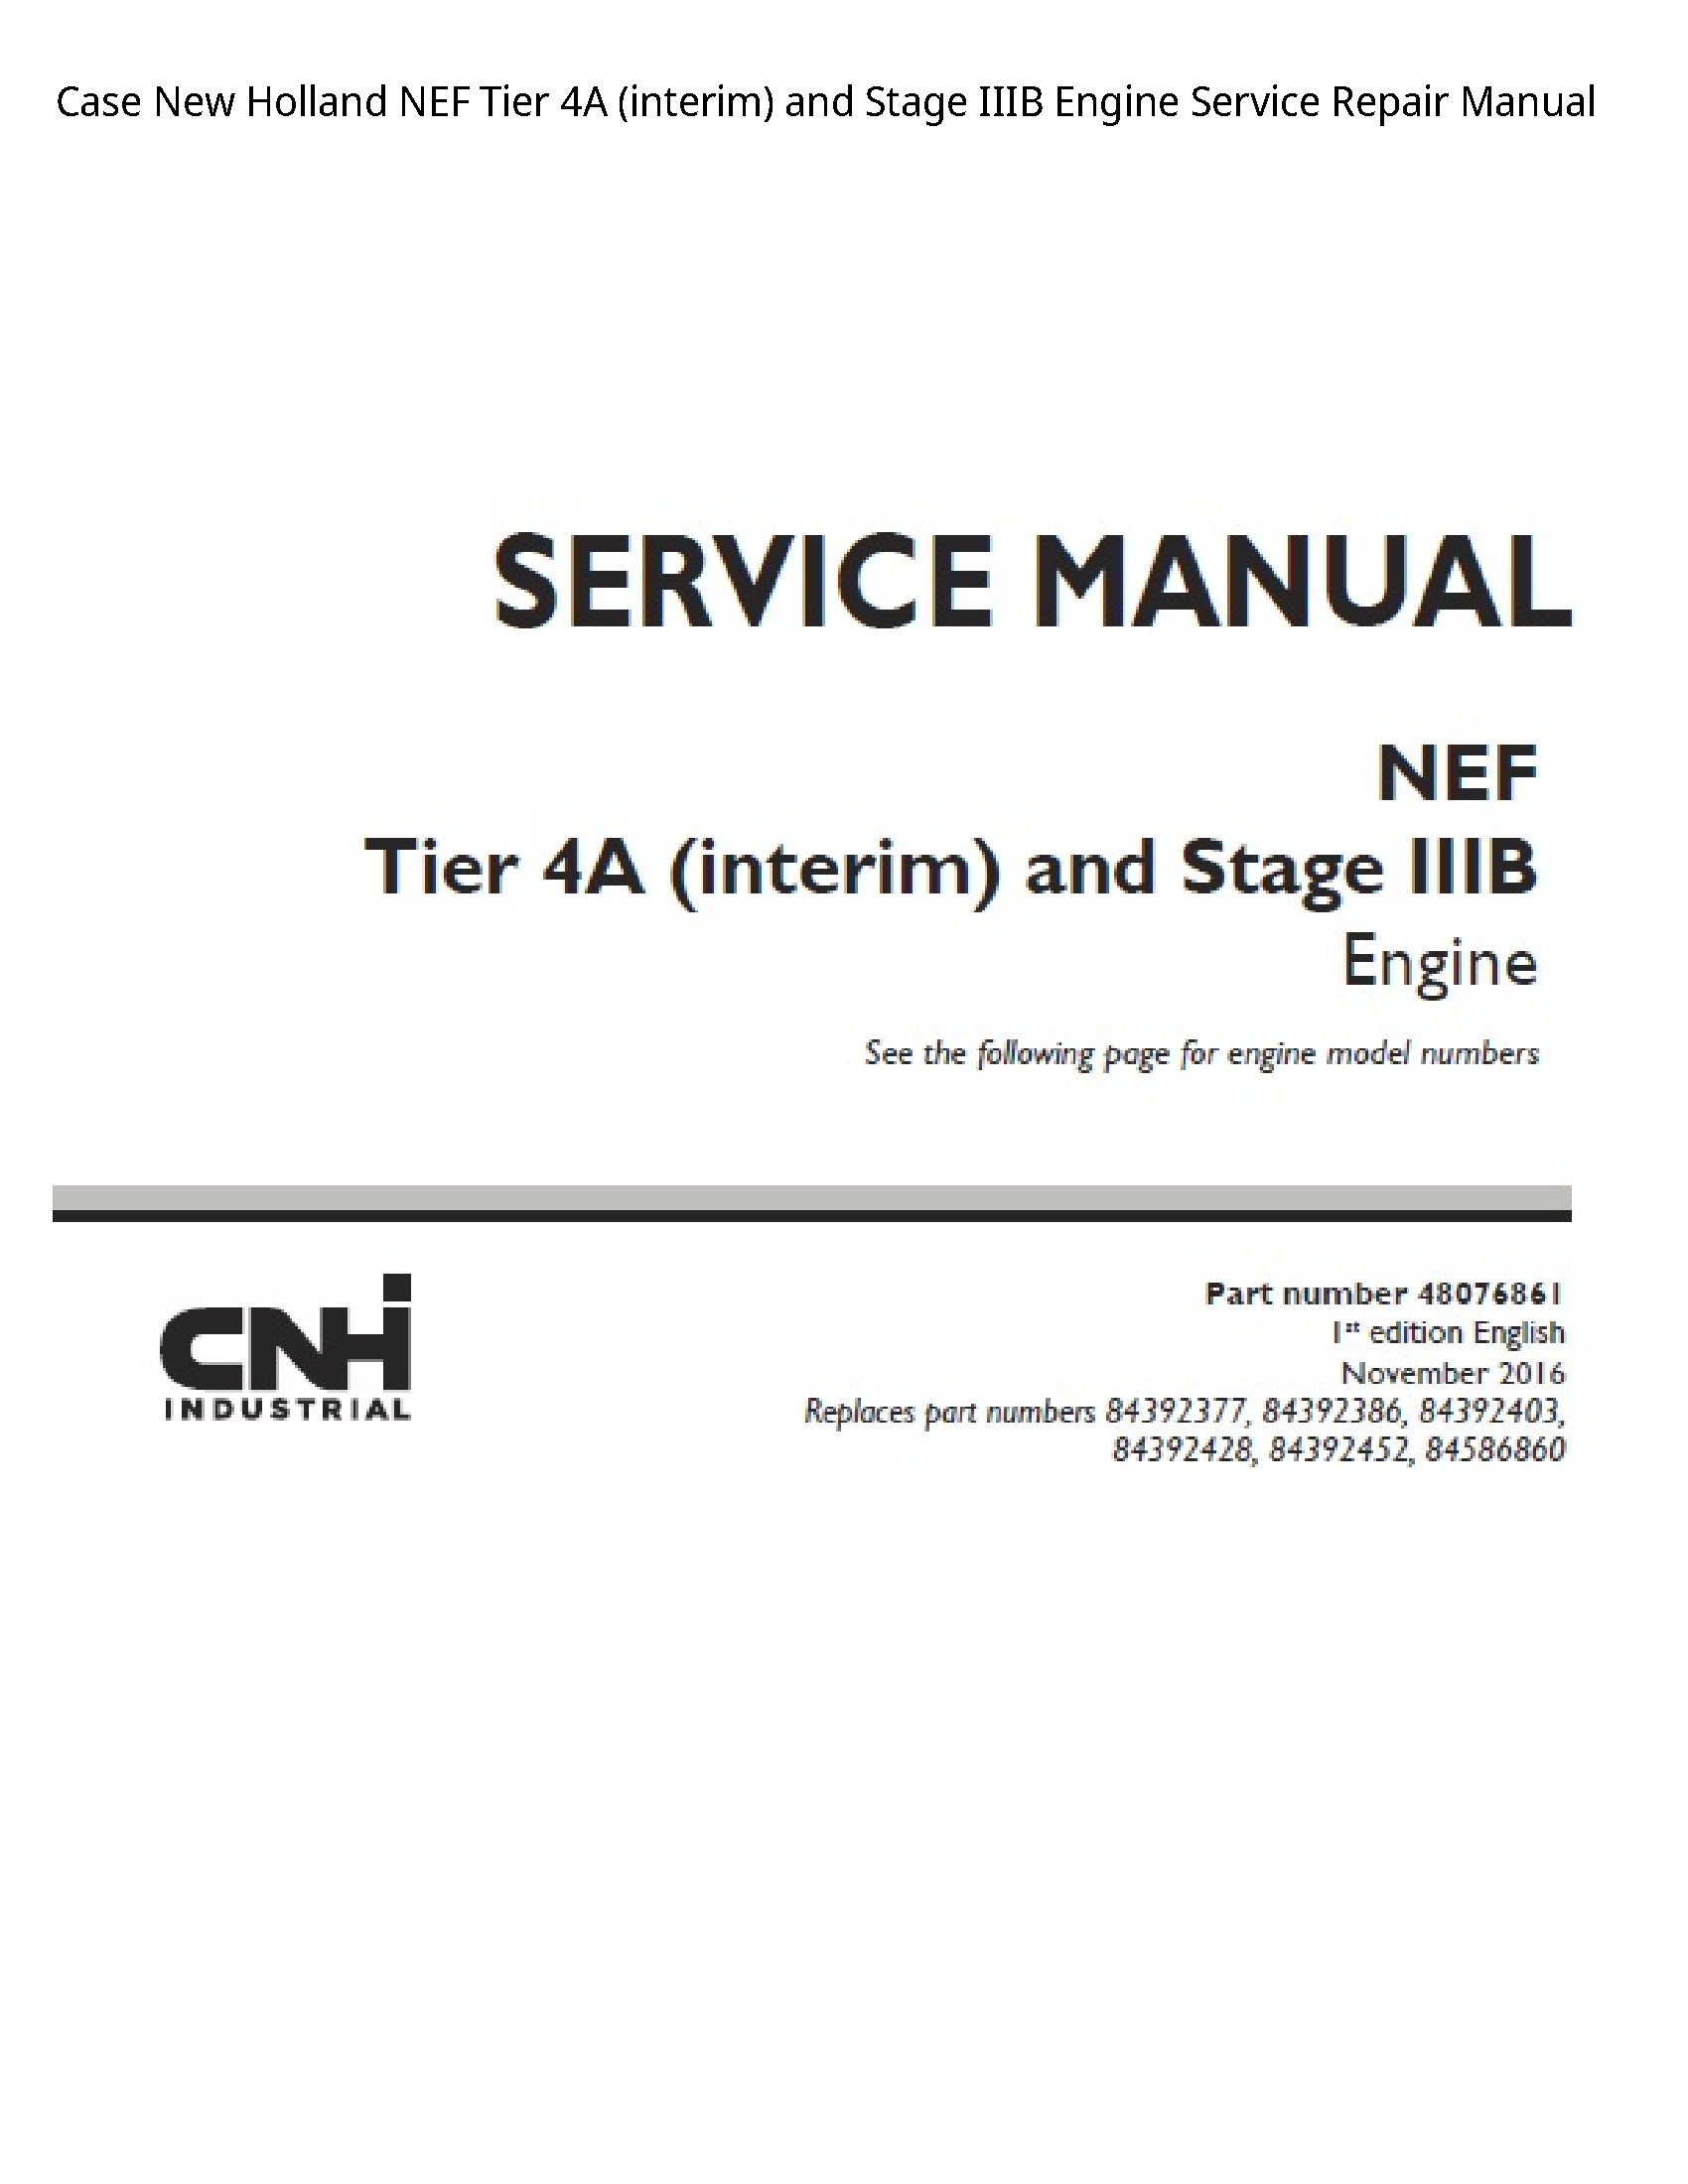 Case/Case IH 4A New Holland NEF Tier (interim)  Stage IIIB Engine manual